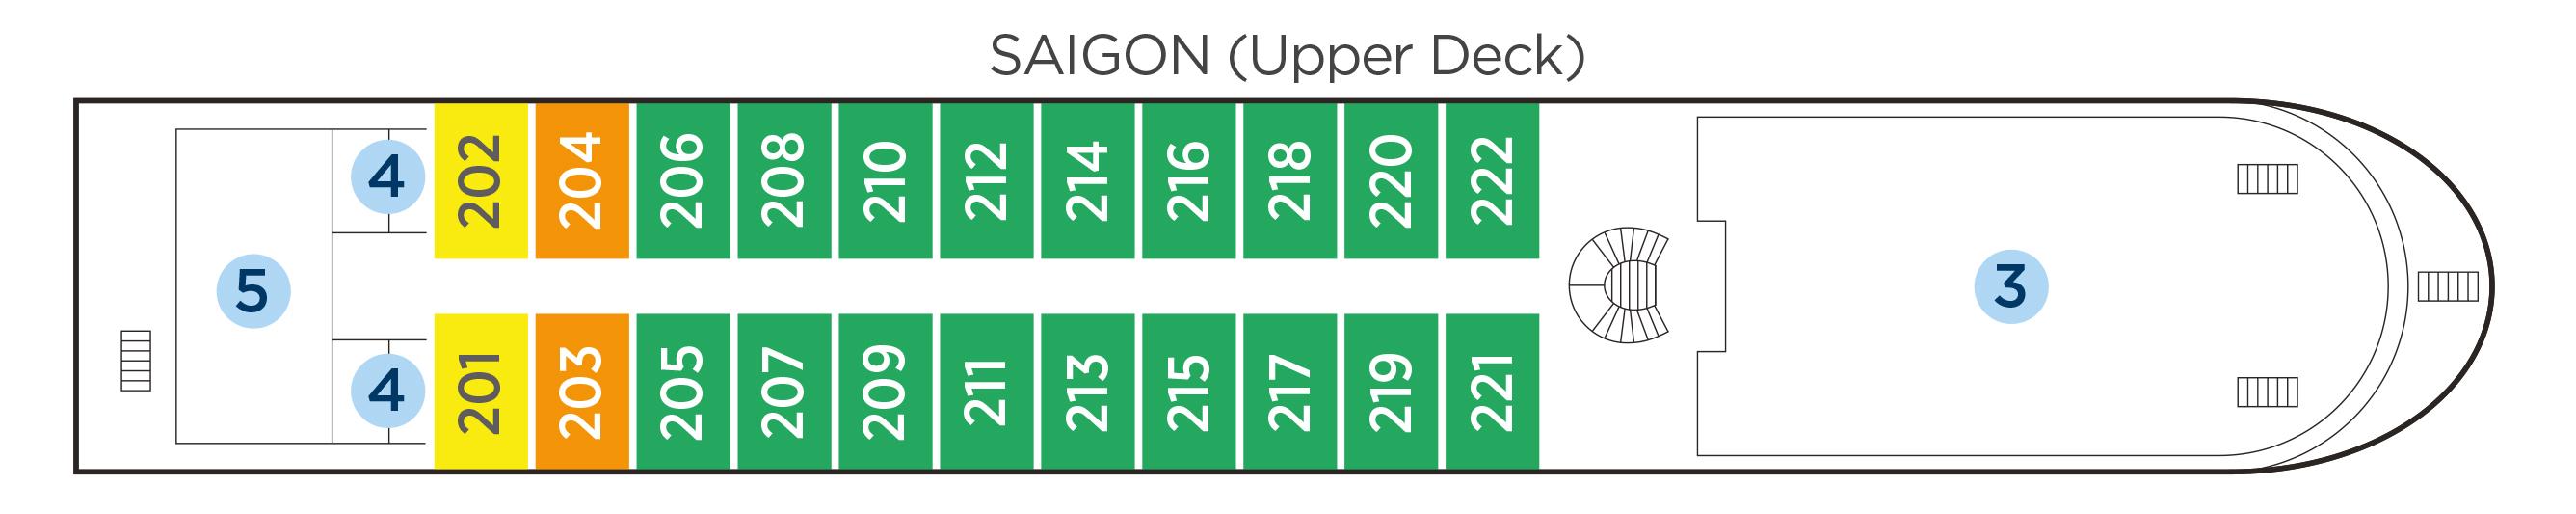 aigon (Upper Deck)